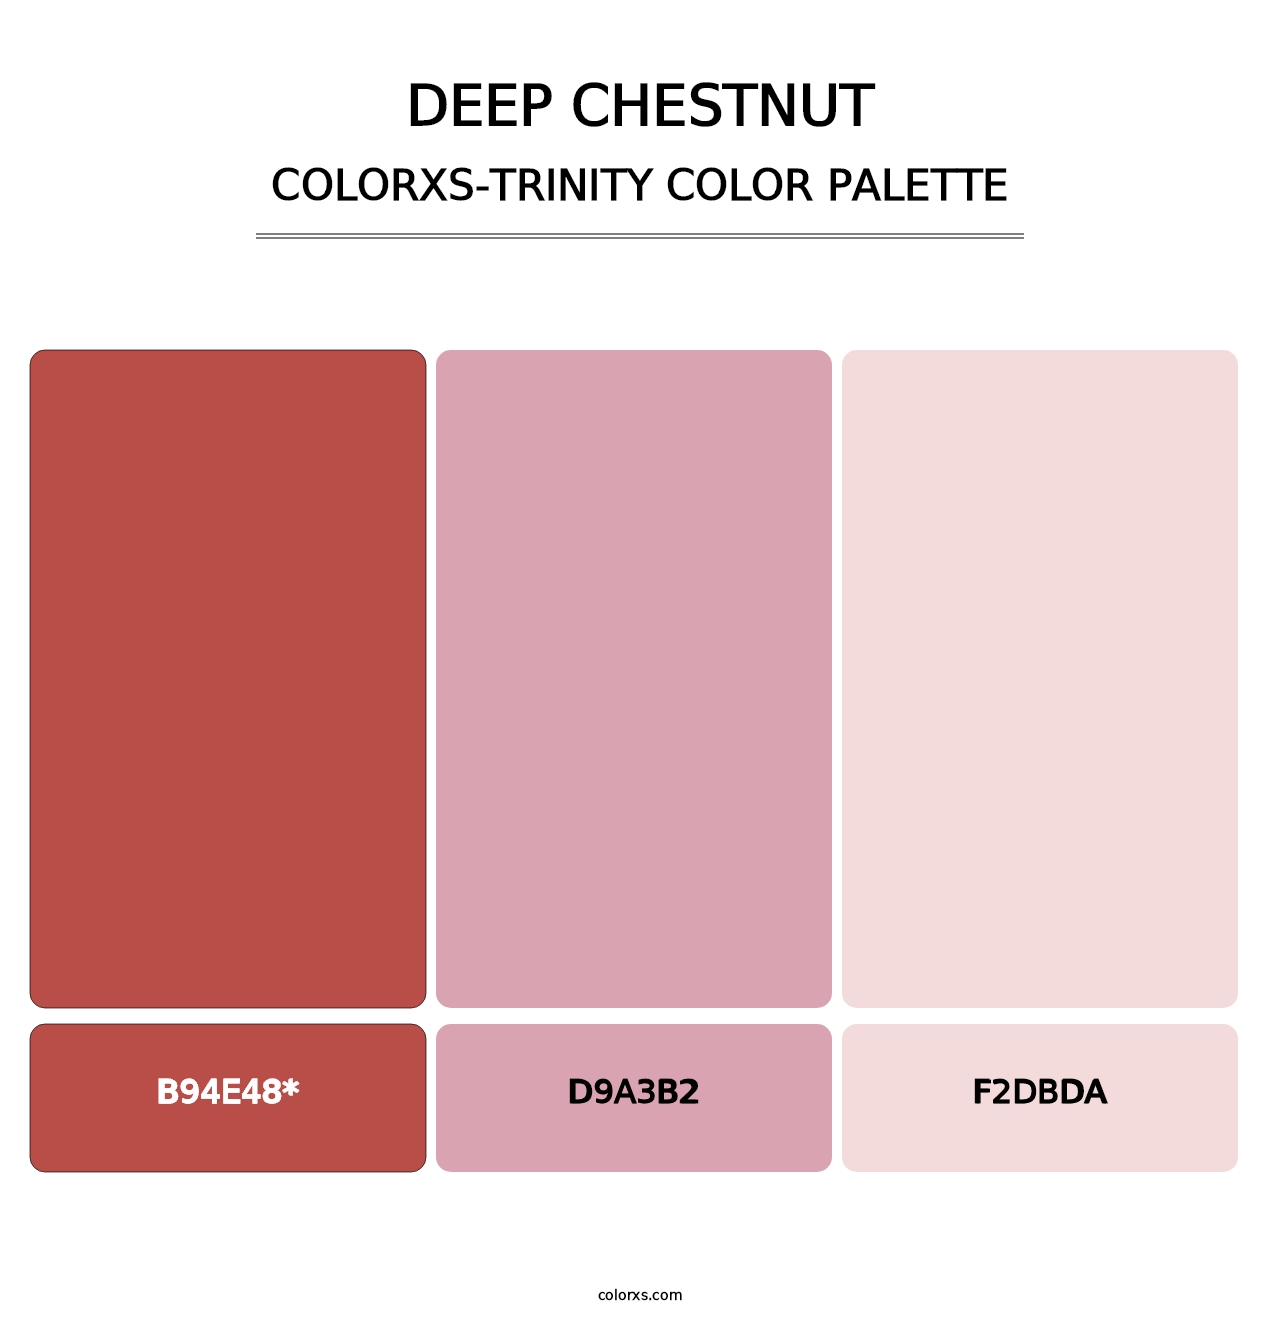 Deep Chestnut - Colorxs Trinity Palette